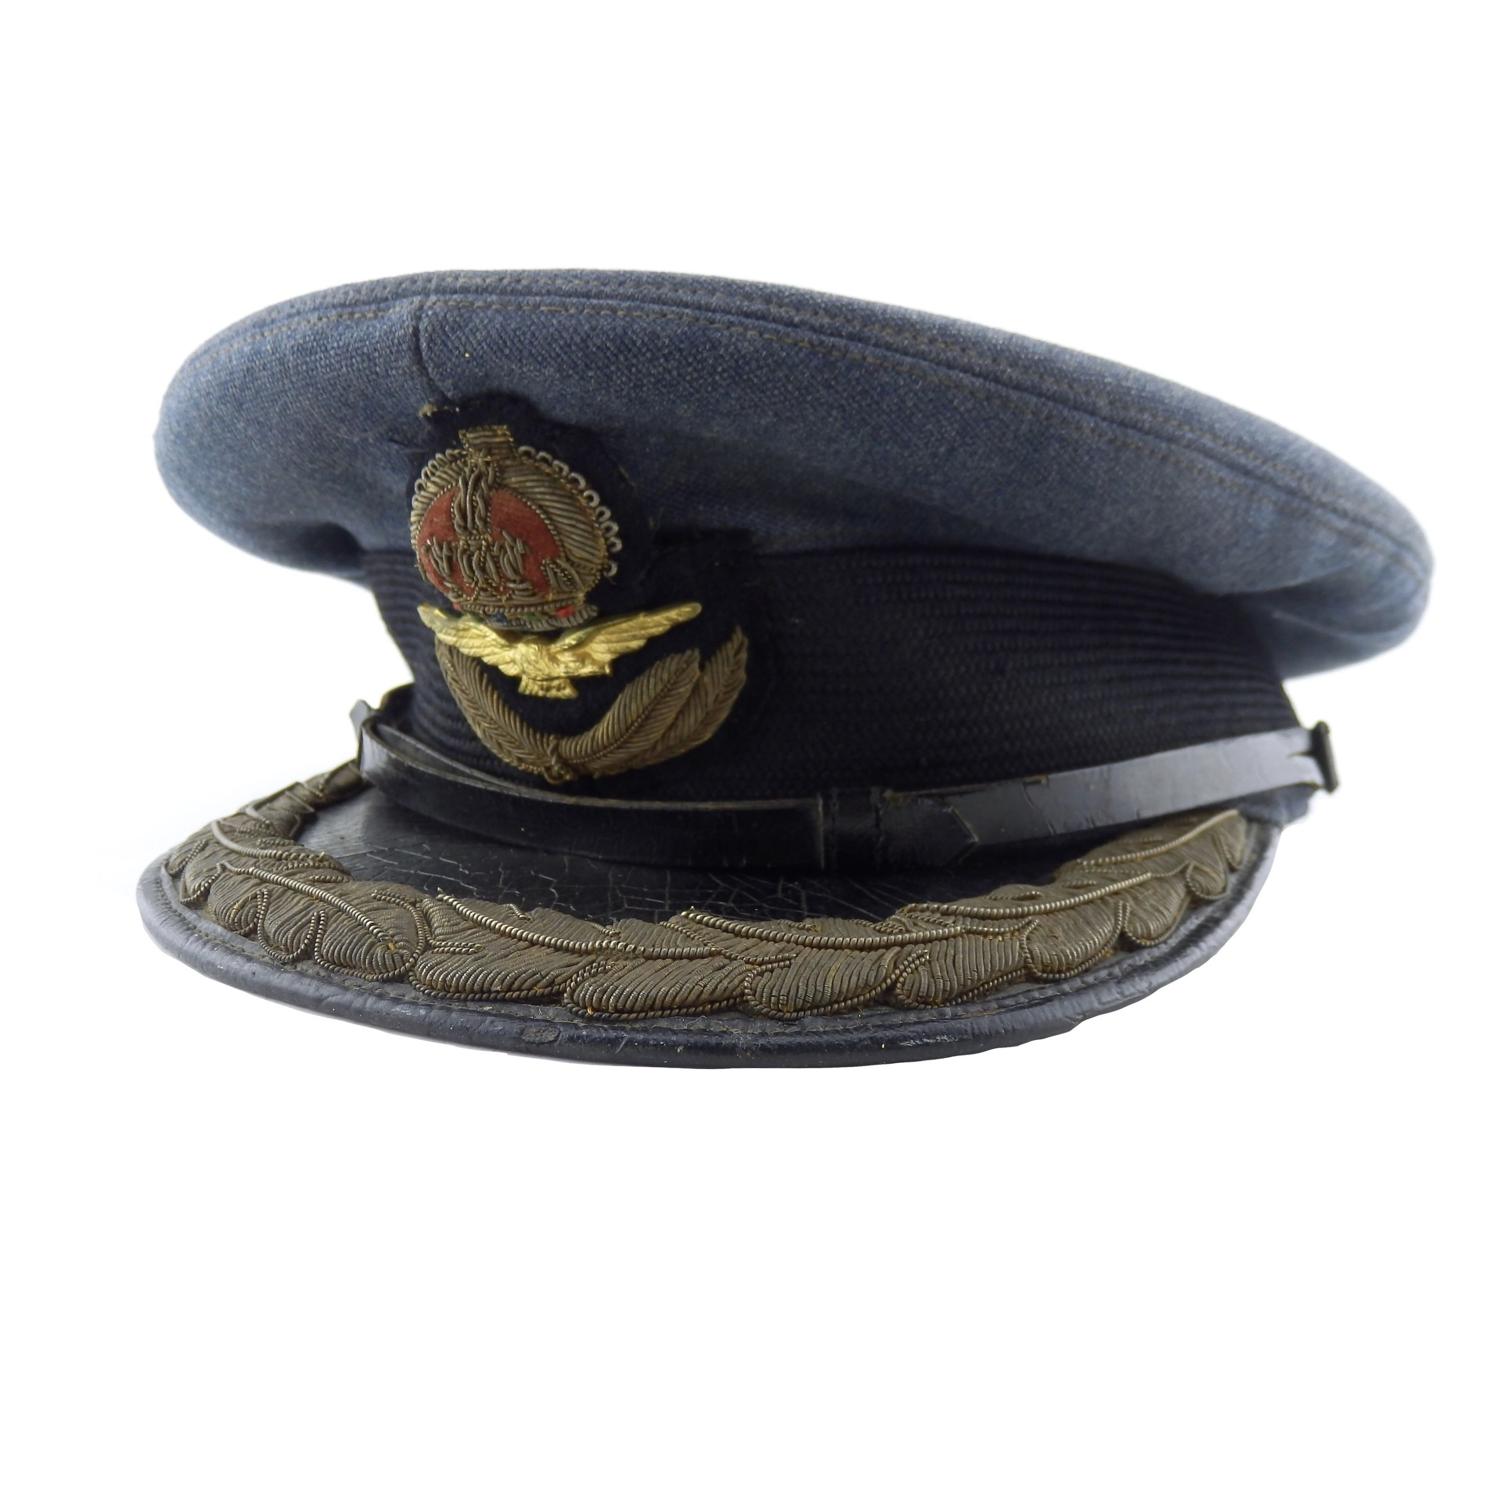 RAF Group Captain rank service dress cap